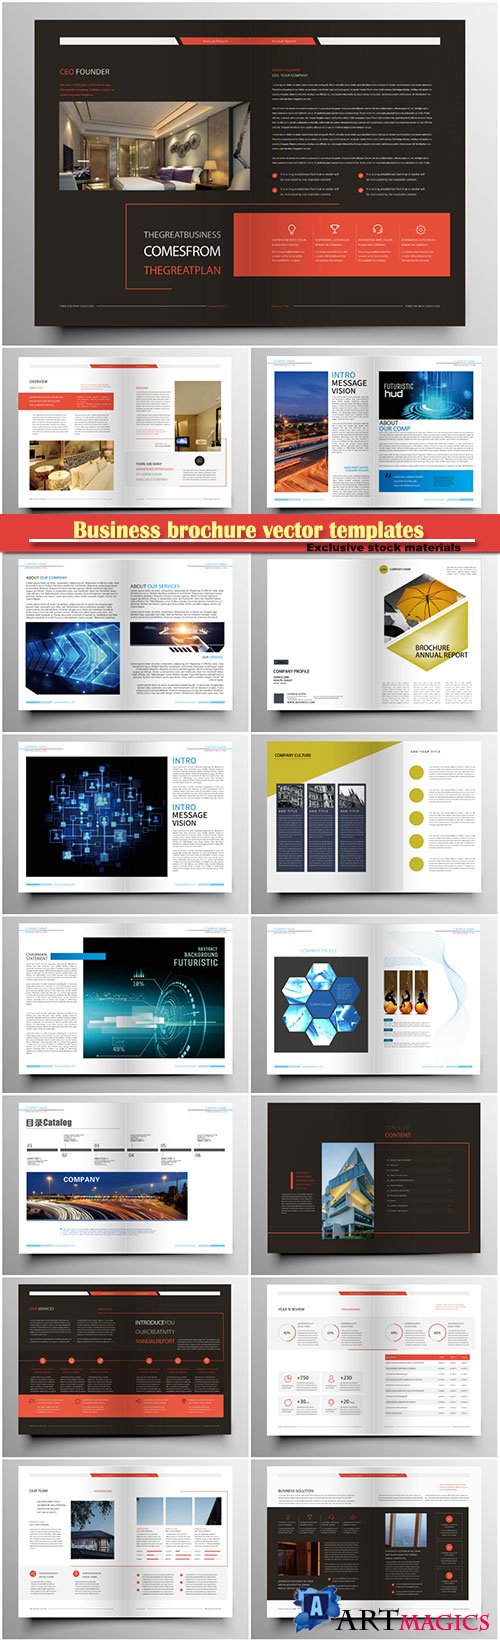 Business brochure vector templates, magazine cover, business mockup, education, presentation, report # 68